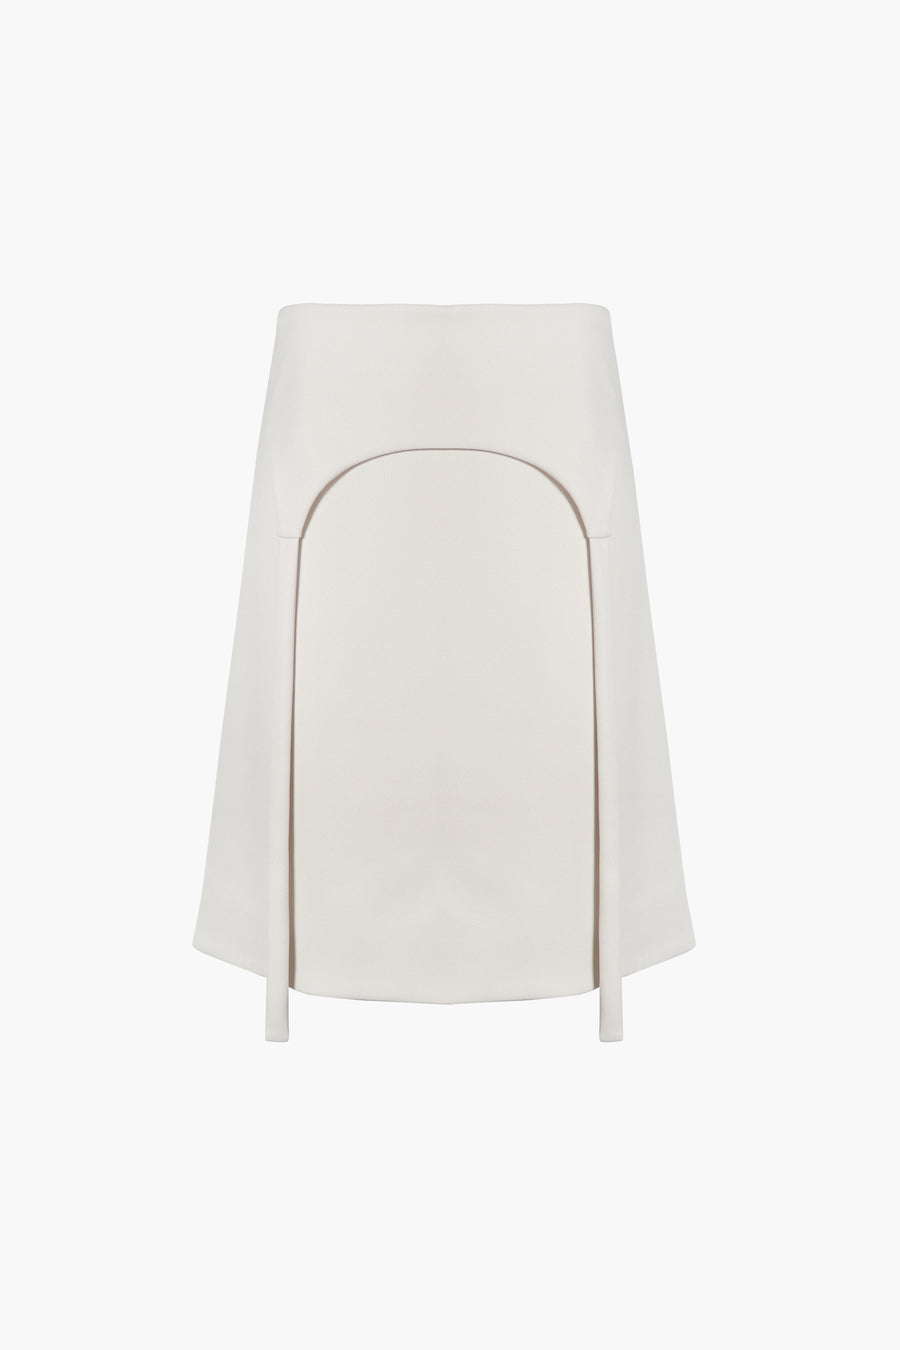 Knee length skirt in off white with garter strap detail